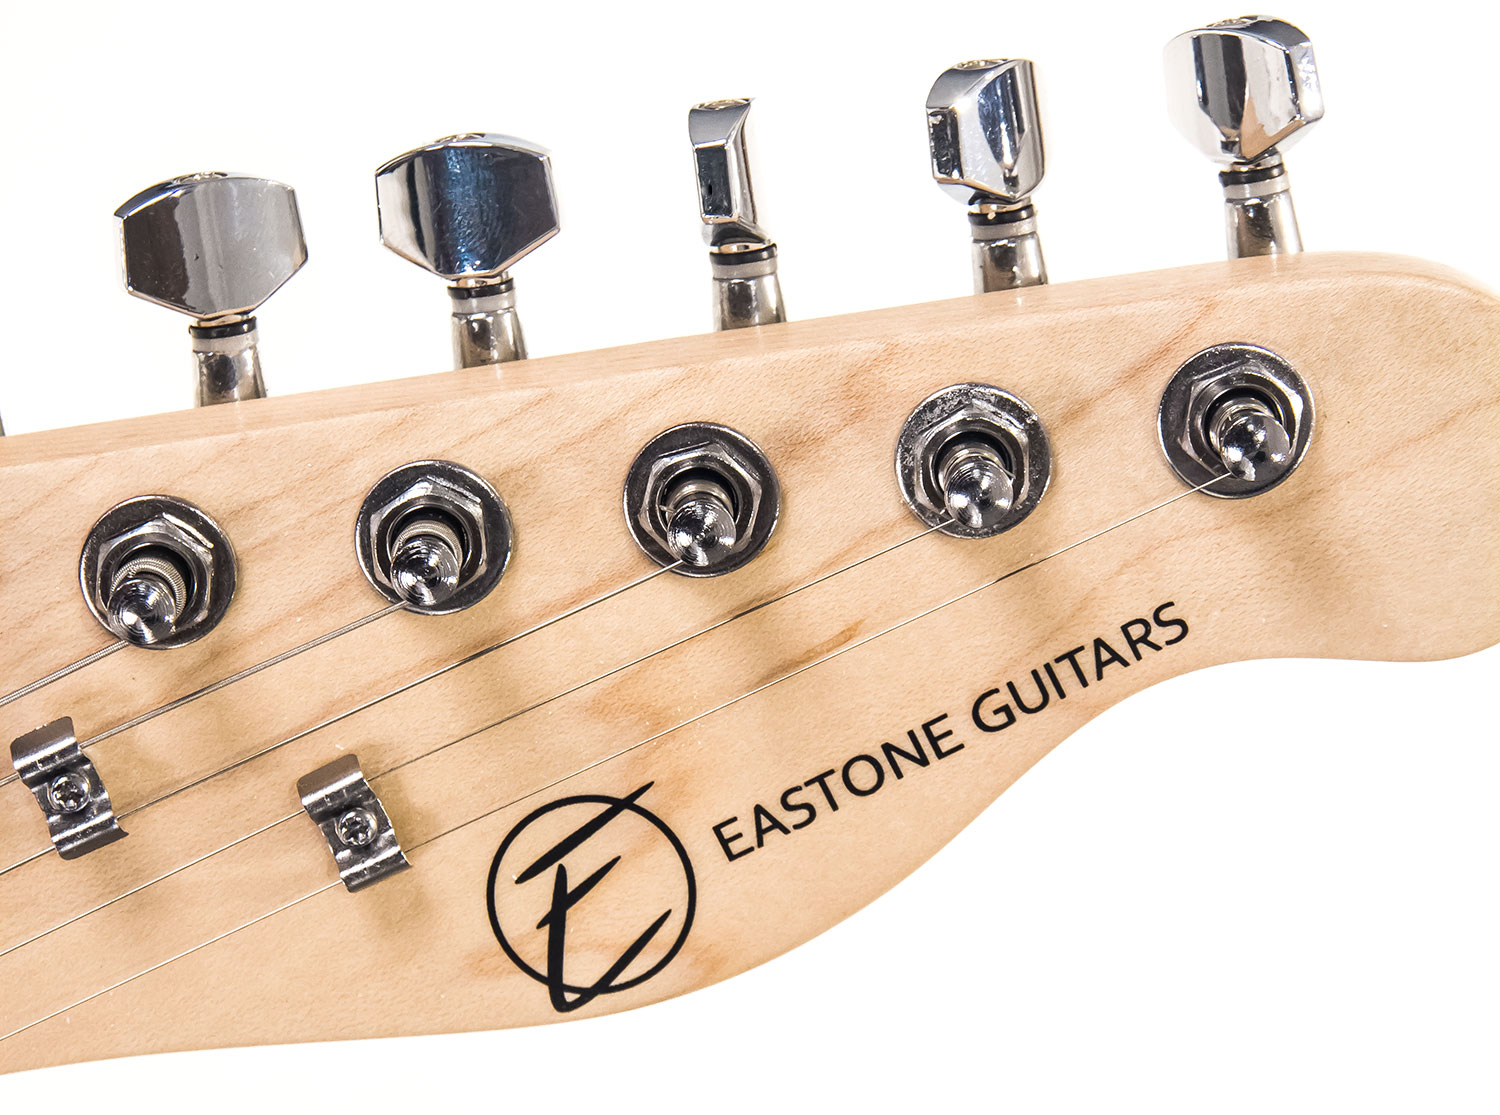 Eastone Tl70 Ss Ht Rw - Ivory - Tel shape electric guitar - Variation 4